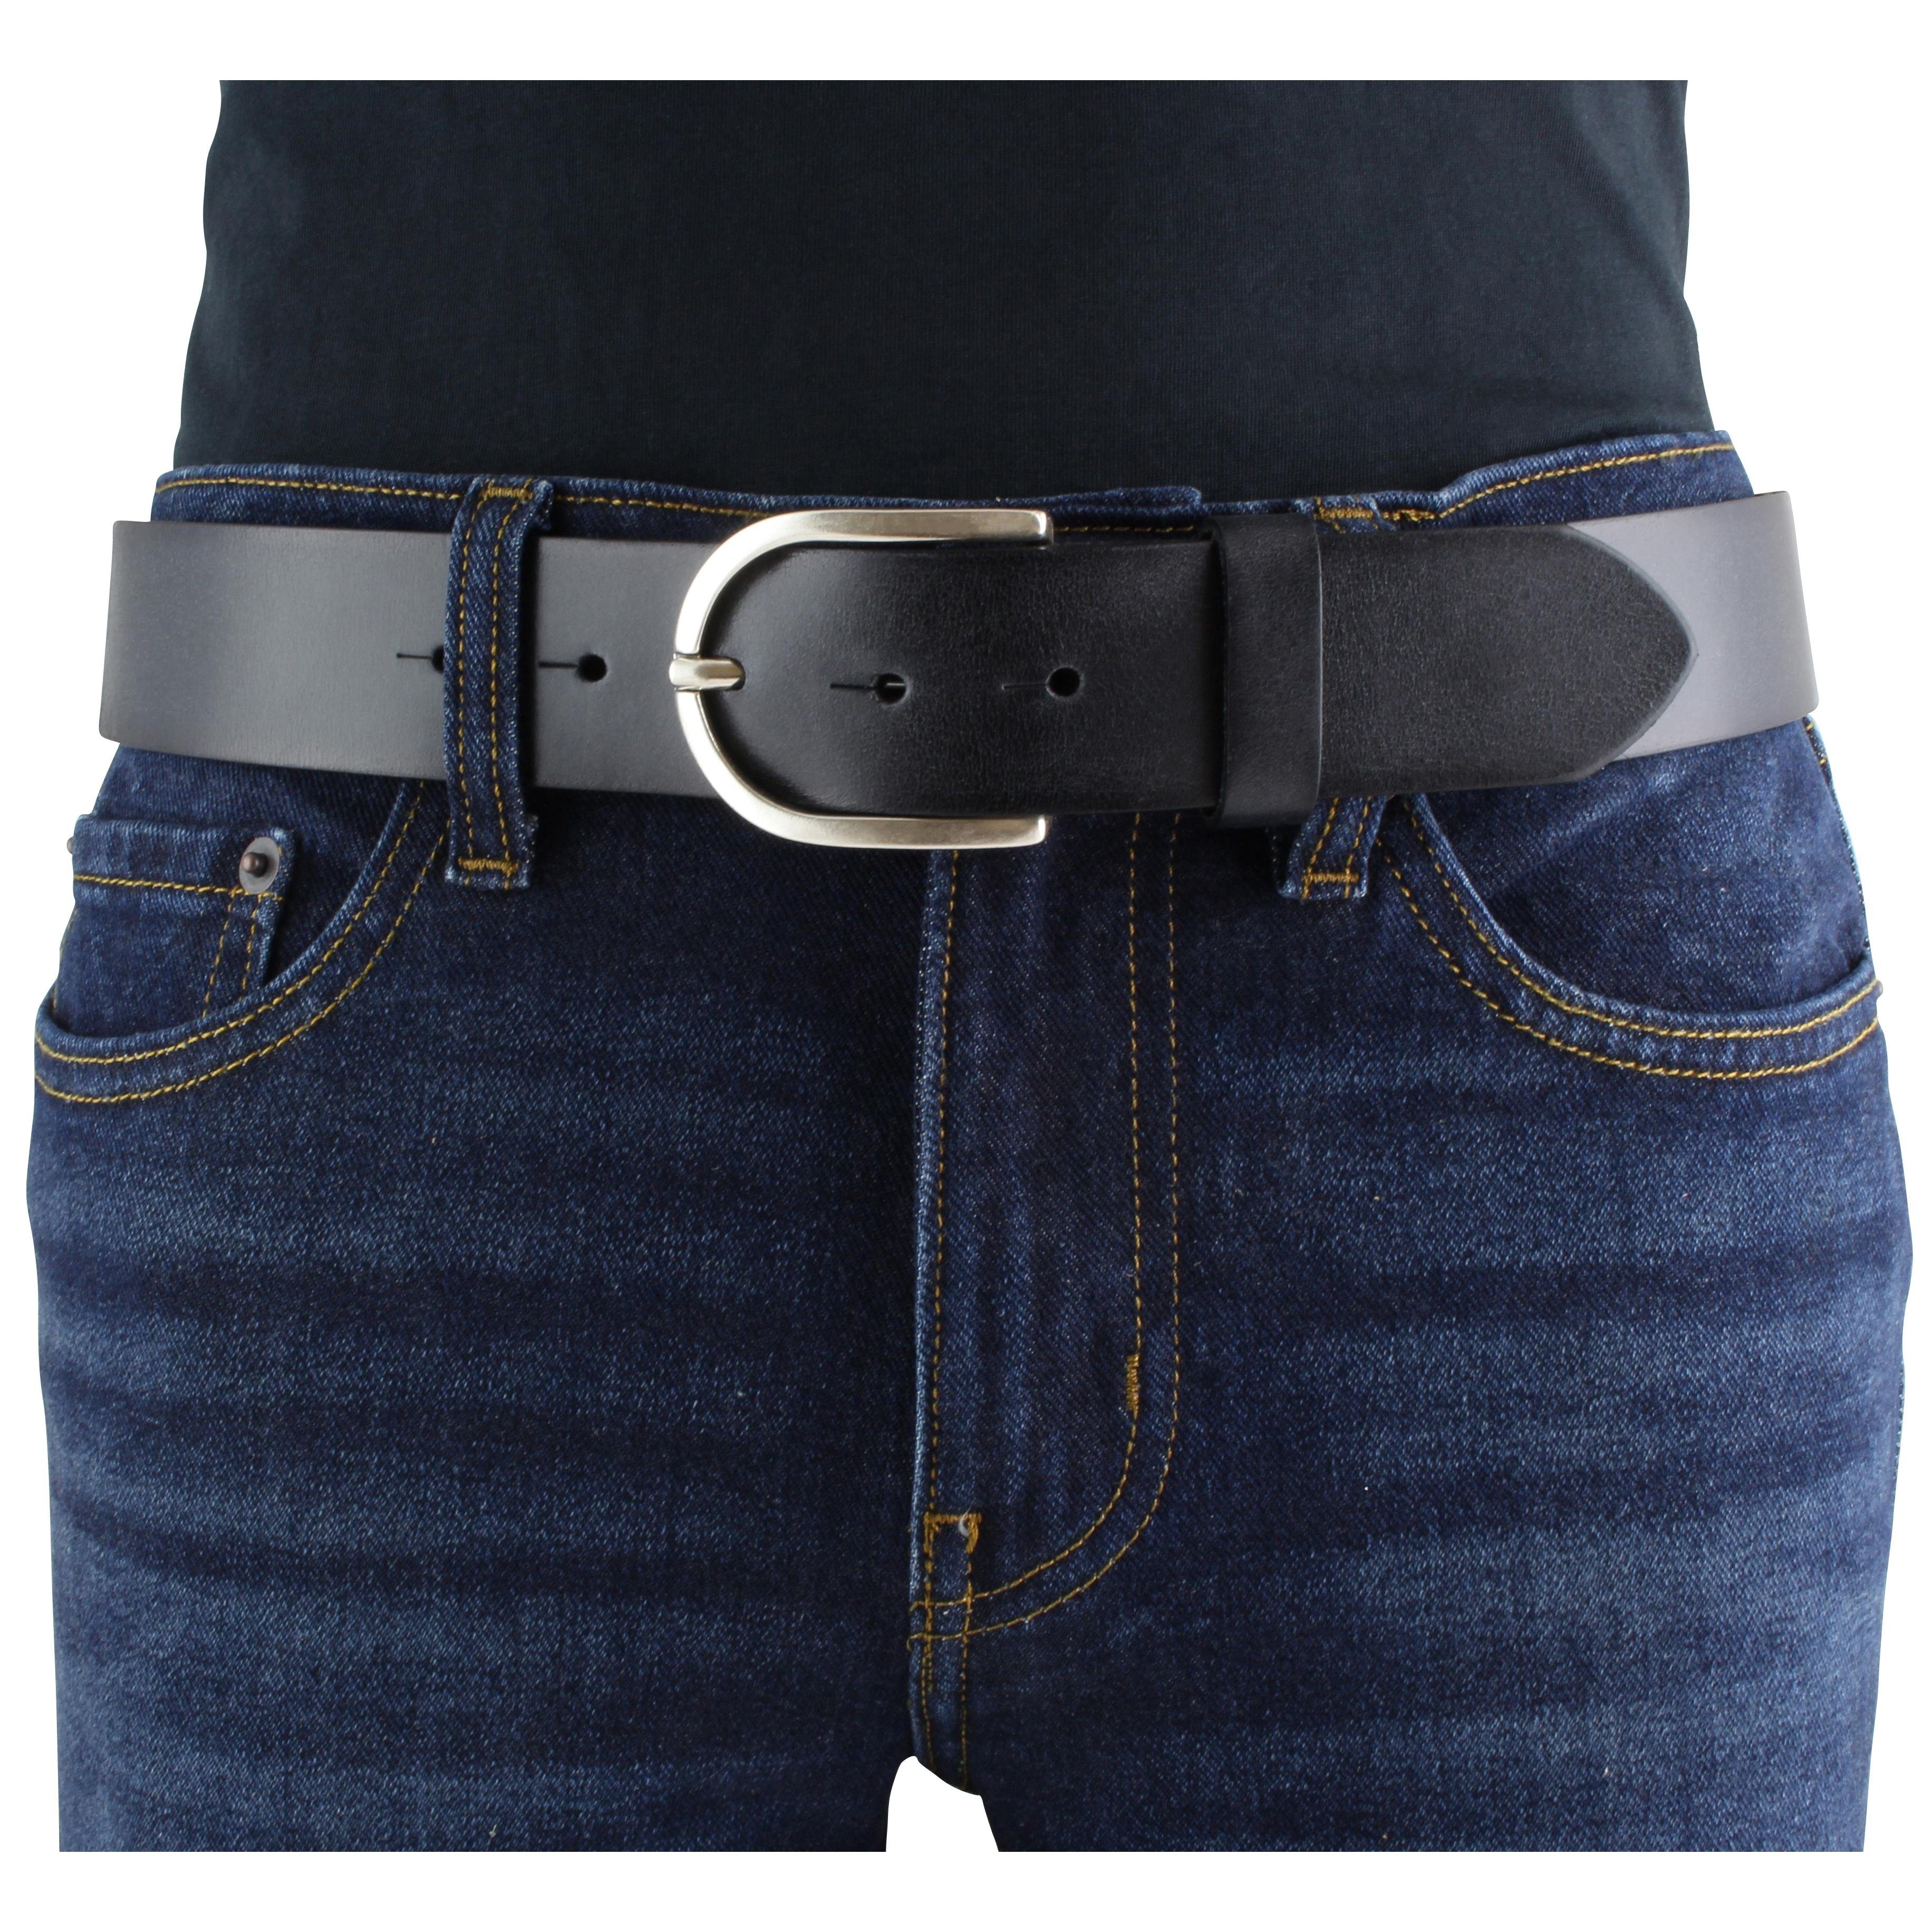 BELTINGER Ledergürtel Damen-Gürtel 4 Jeans-Gürtel - Vintage-Look aus Altsilber cm für Vollrindleder Marine, Da